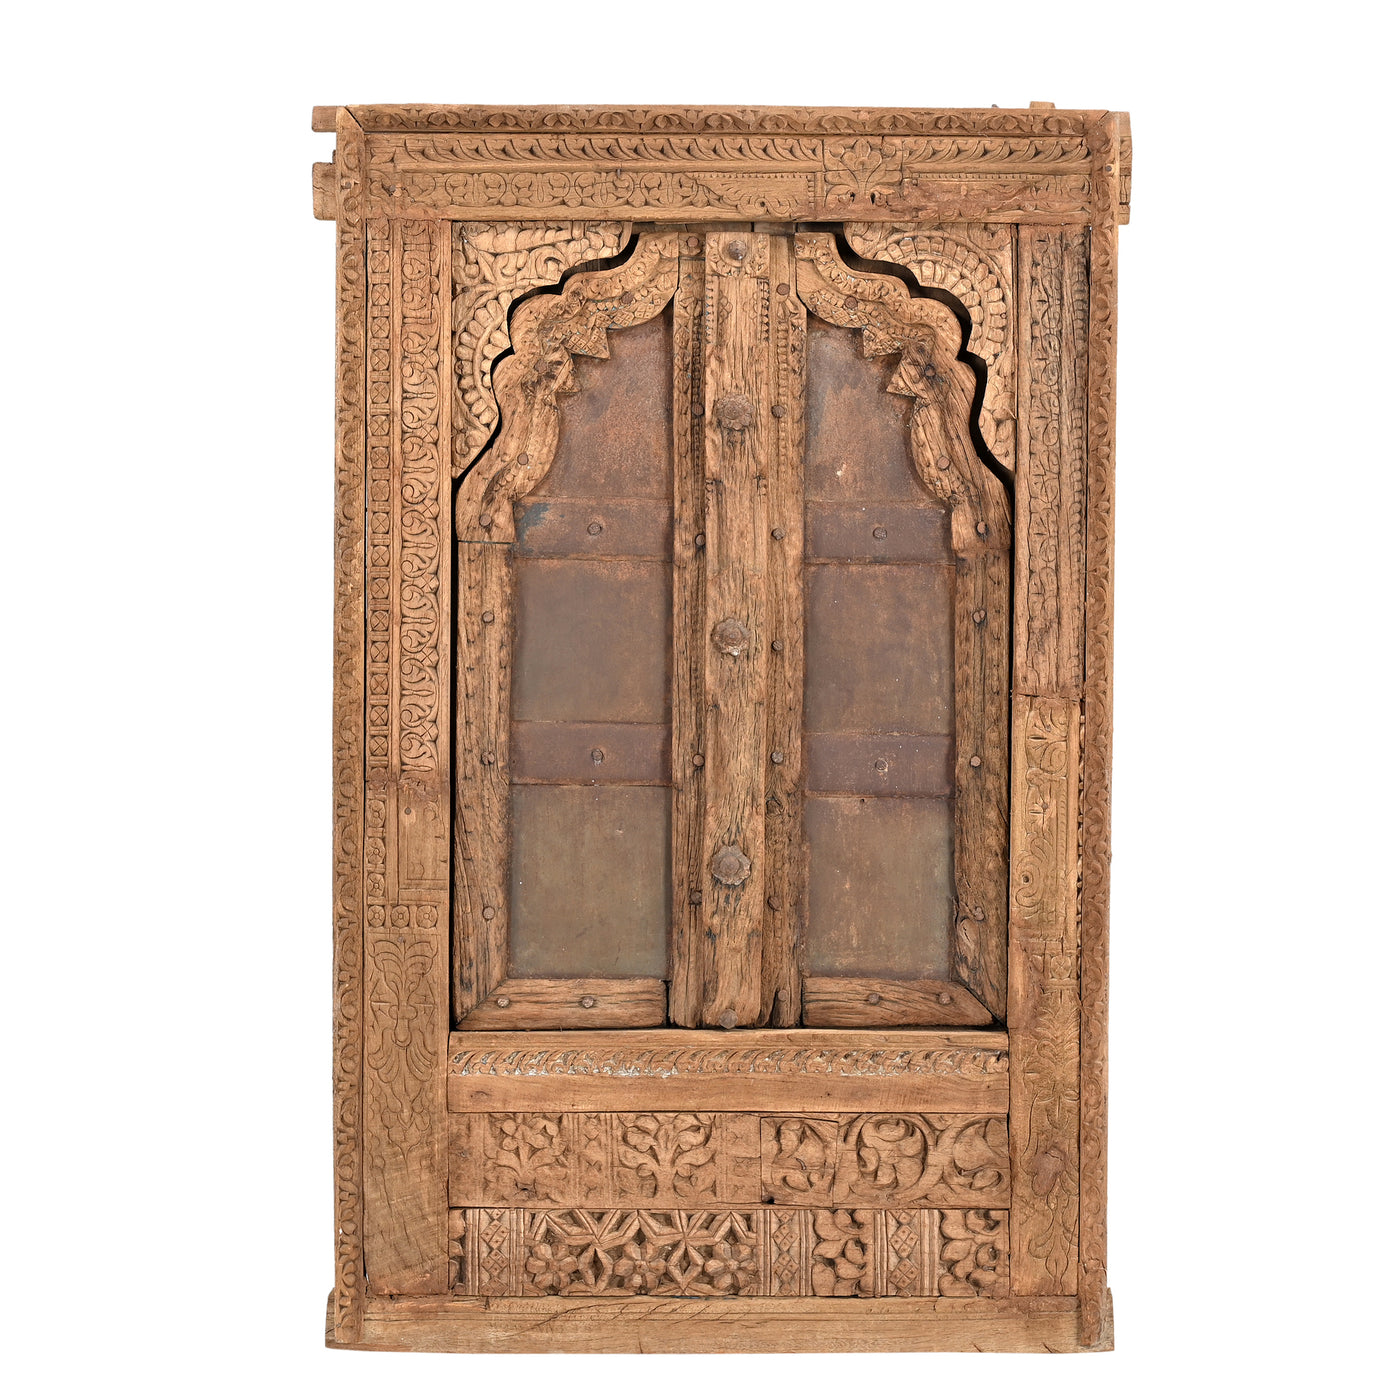 Khidakhi - Old Indian window n ° 6